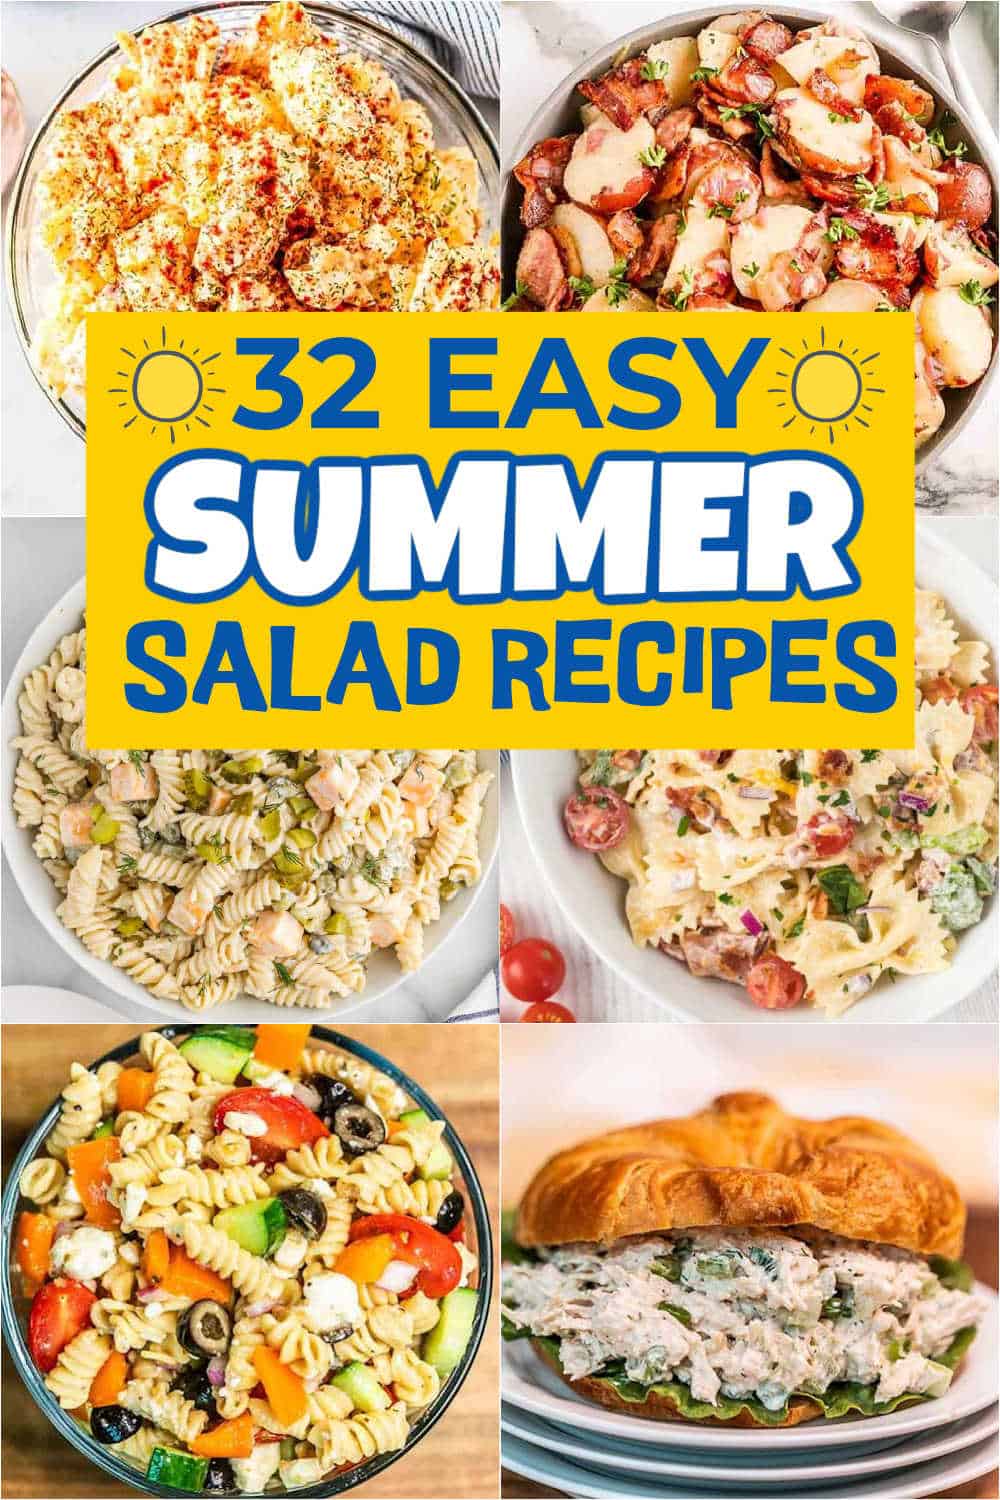 Images of pasta salad and macaroni salad